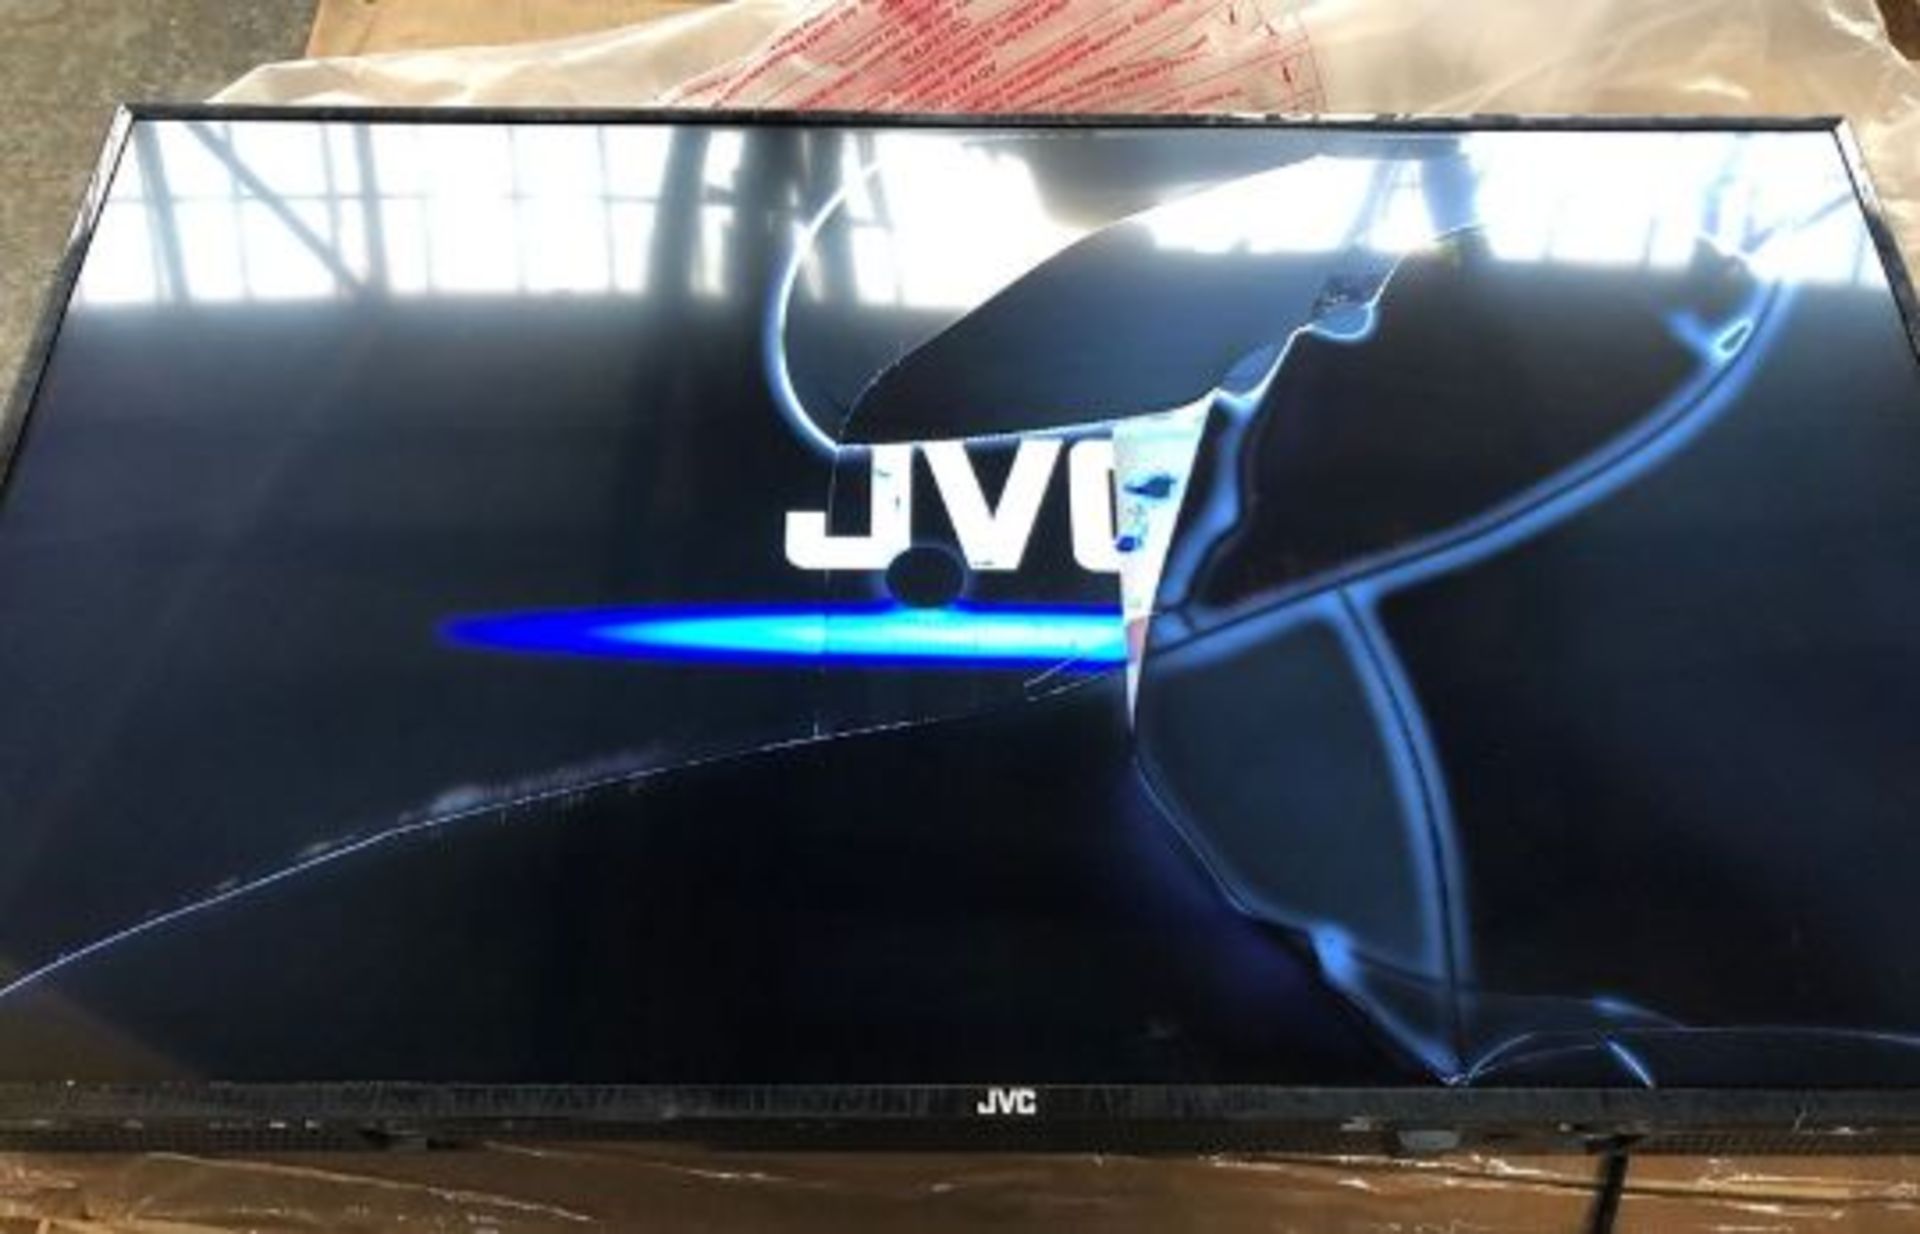 JVC 40" FULL HD LED TV - LT-40C590 RRP £249.99